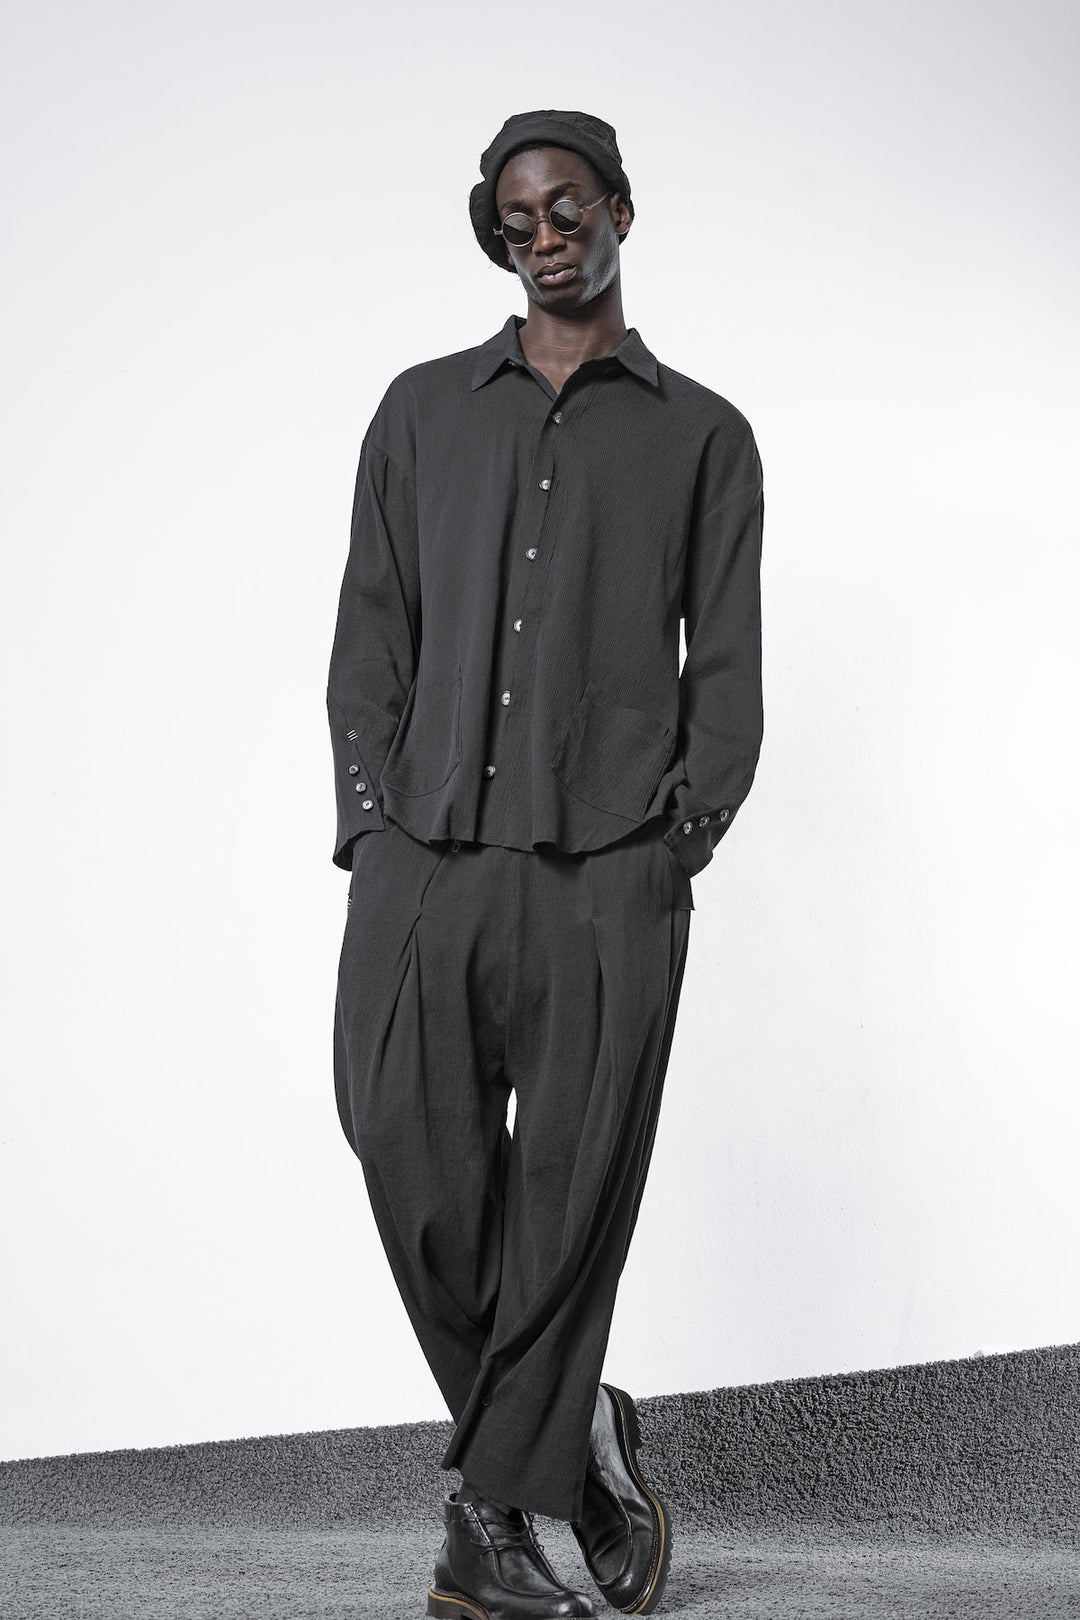 All Black Outfits für Männer - Schwarze Avantgarde Mode